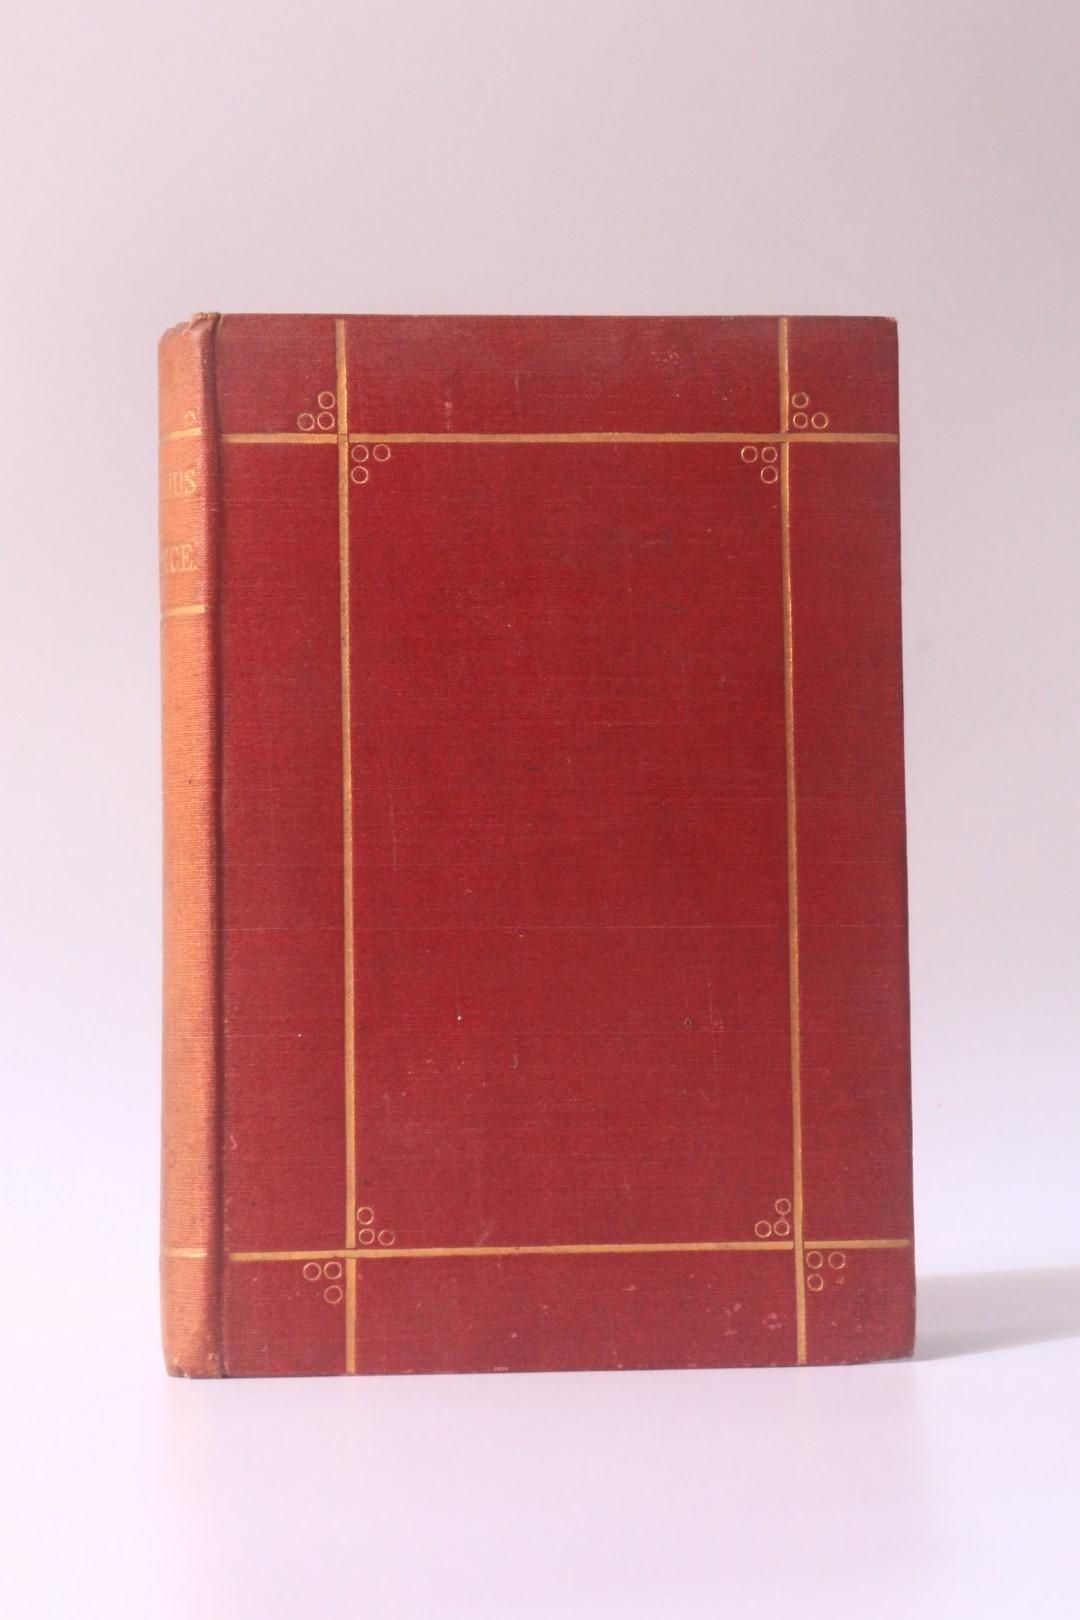 I.S.E. [9th Earl of Southesk, James Carnegie] - Herminius: A Romance - Edmondston & Douglas, 1862, Signed First Edition.